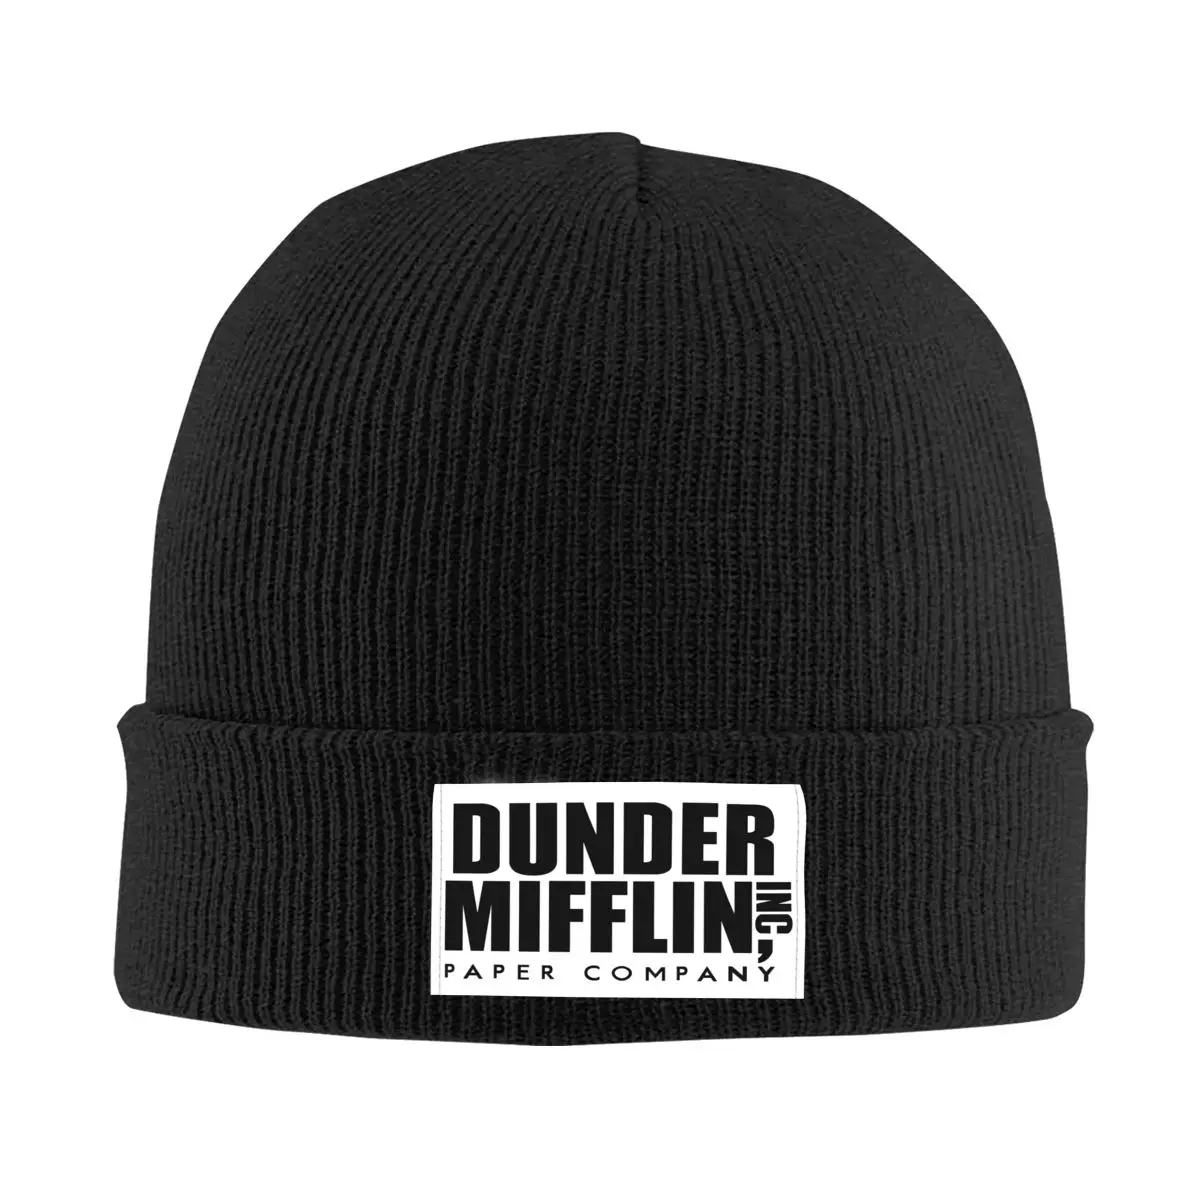 Dunder Mifflin Paper Company Skullies Beanies Caps Unisex Winter Warm Knitted Hat The Office TV Show Bonnet Hats Outdoor Ski Cap